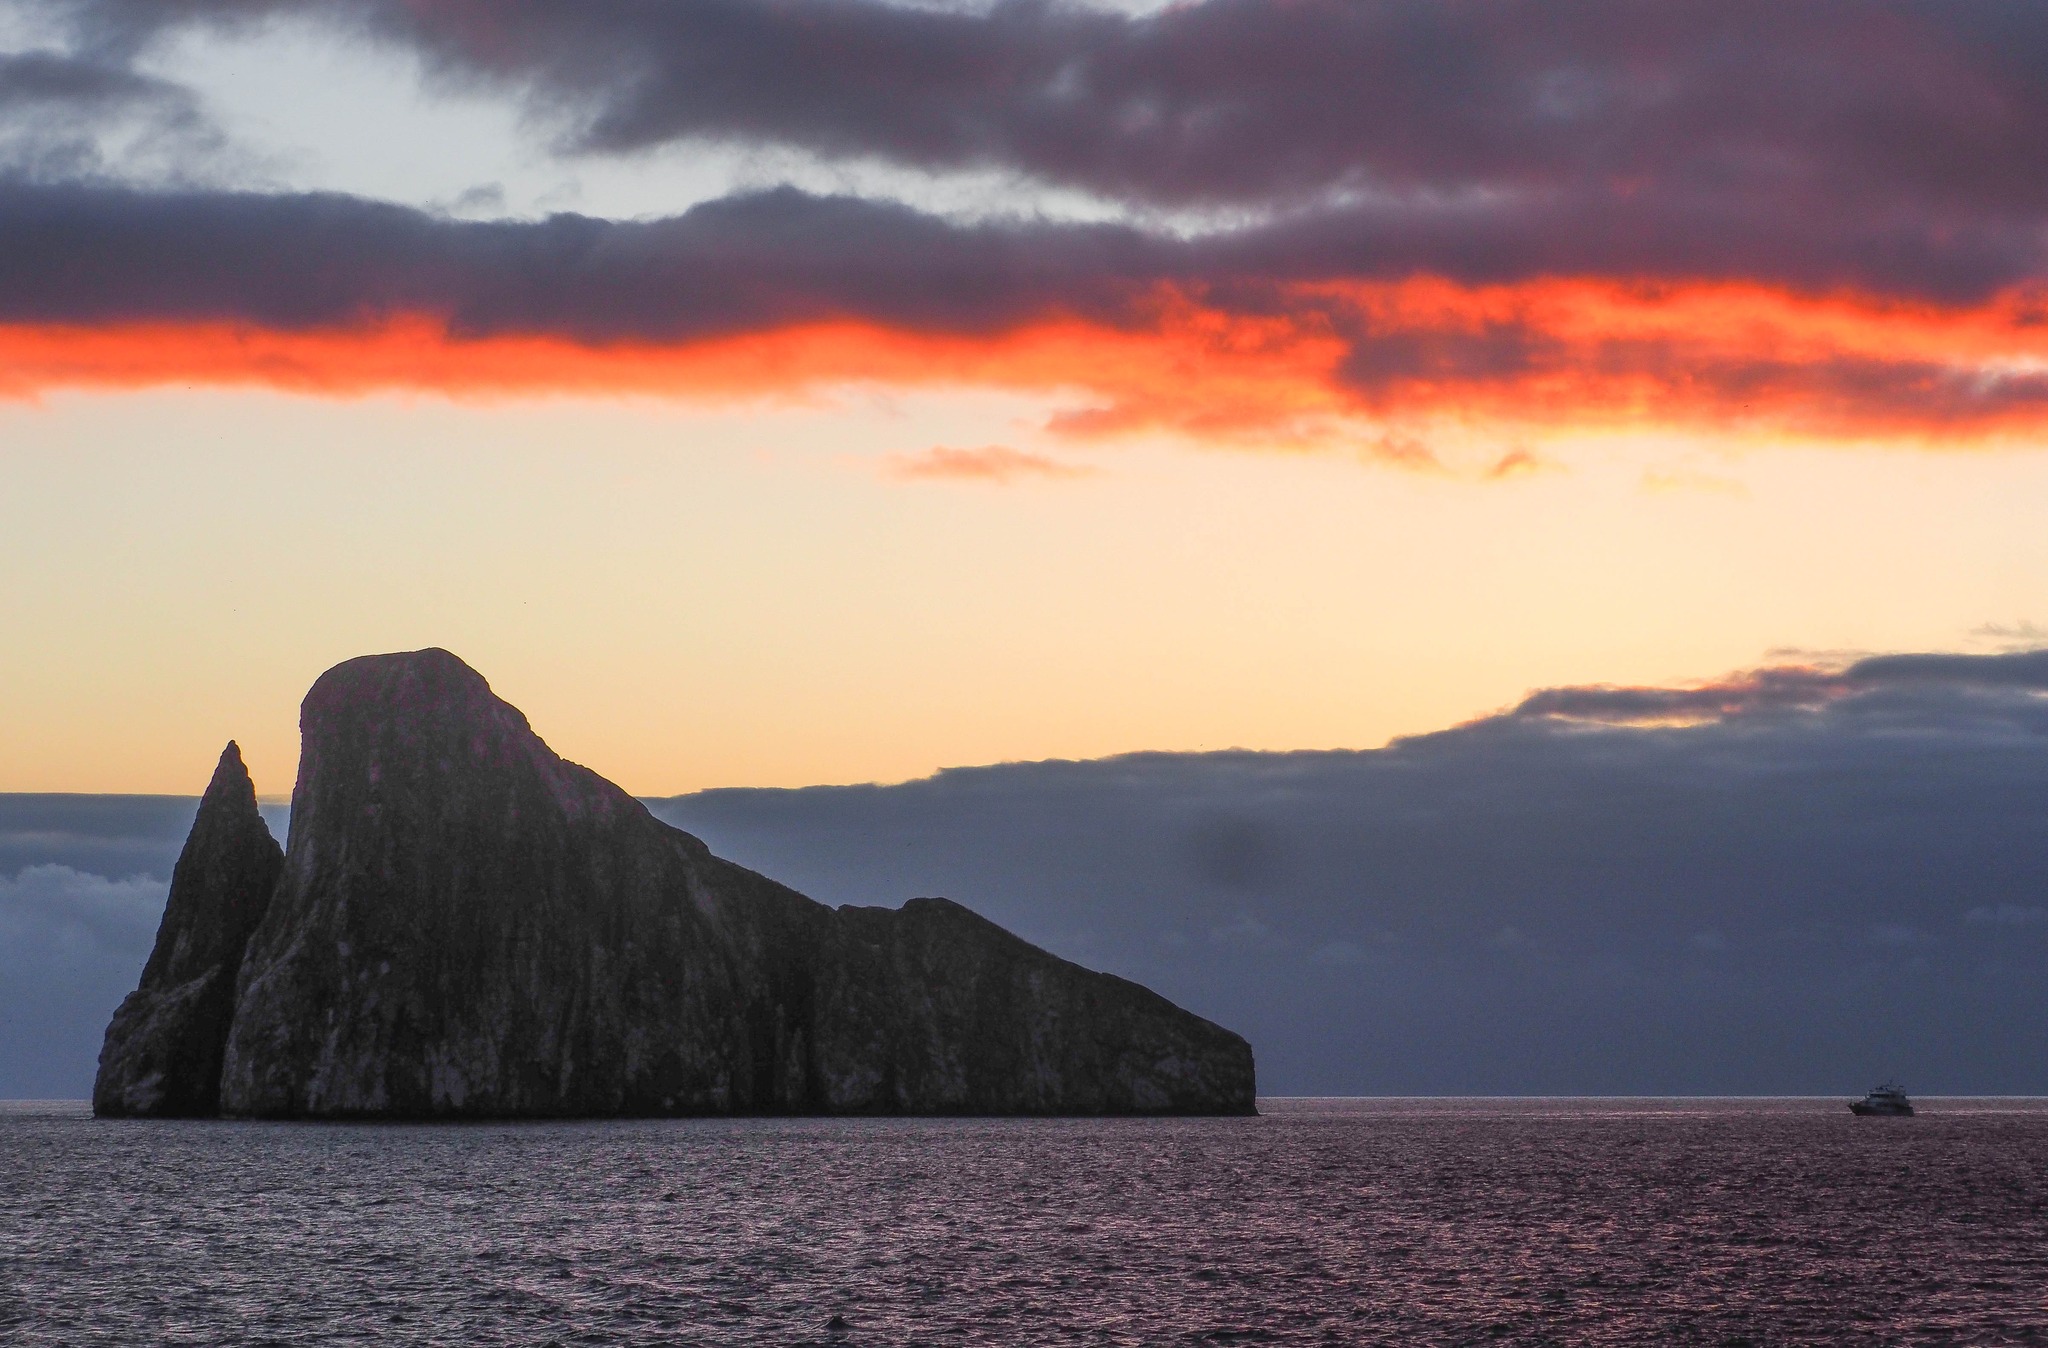 The sun set in the Galapagos Islands. Pam LeBlanc photo